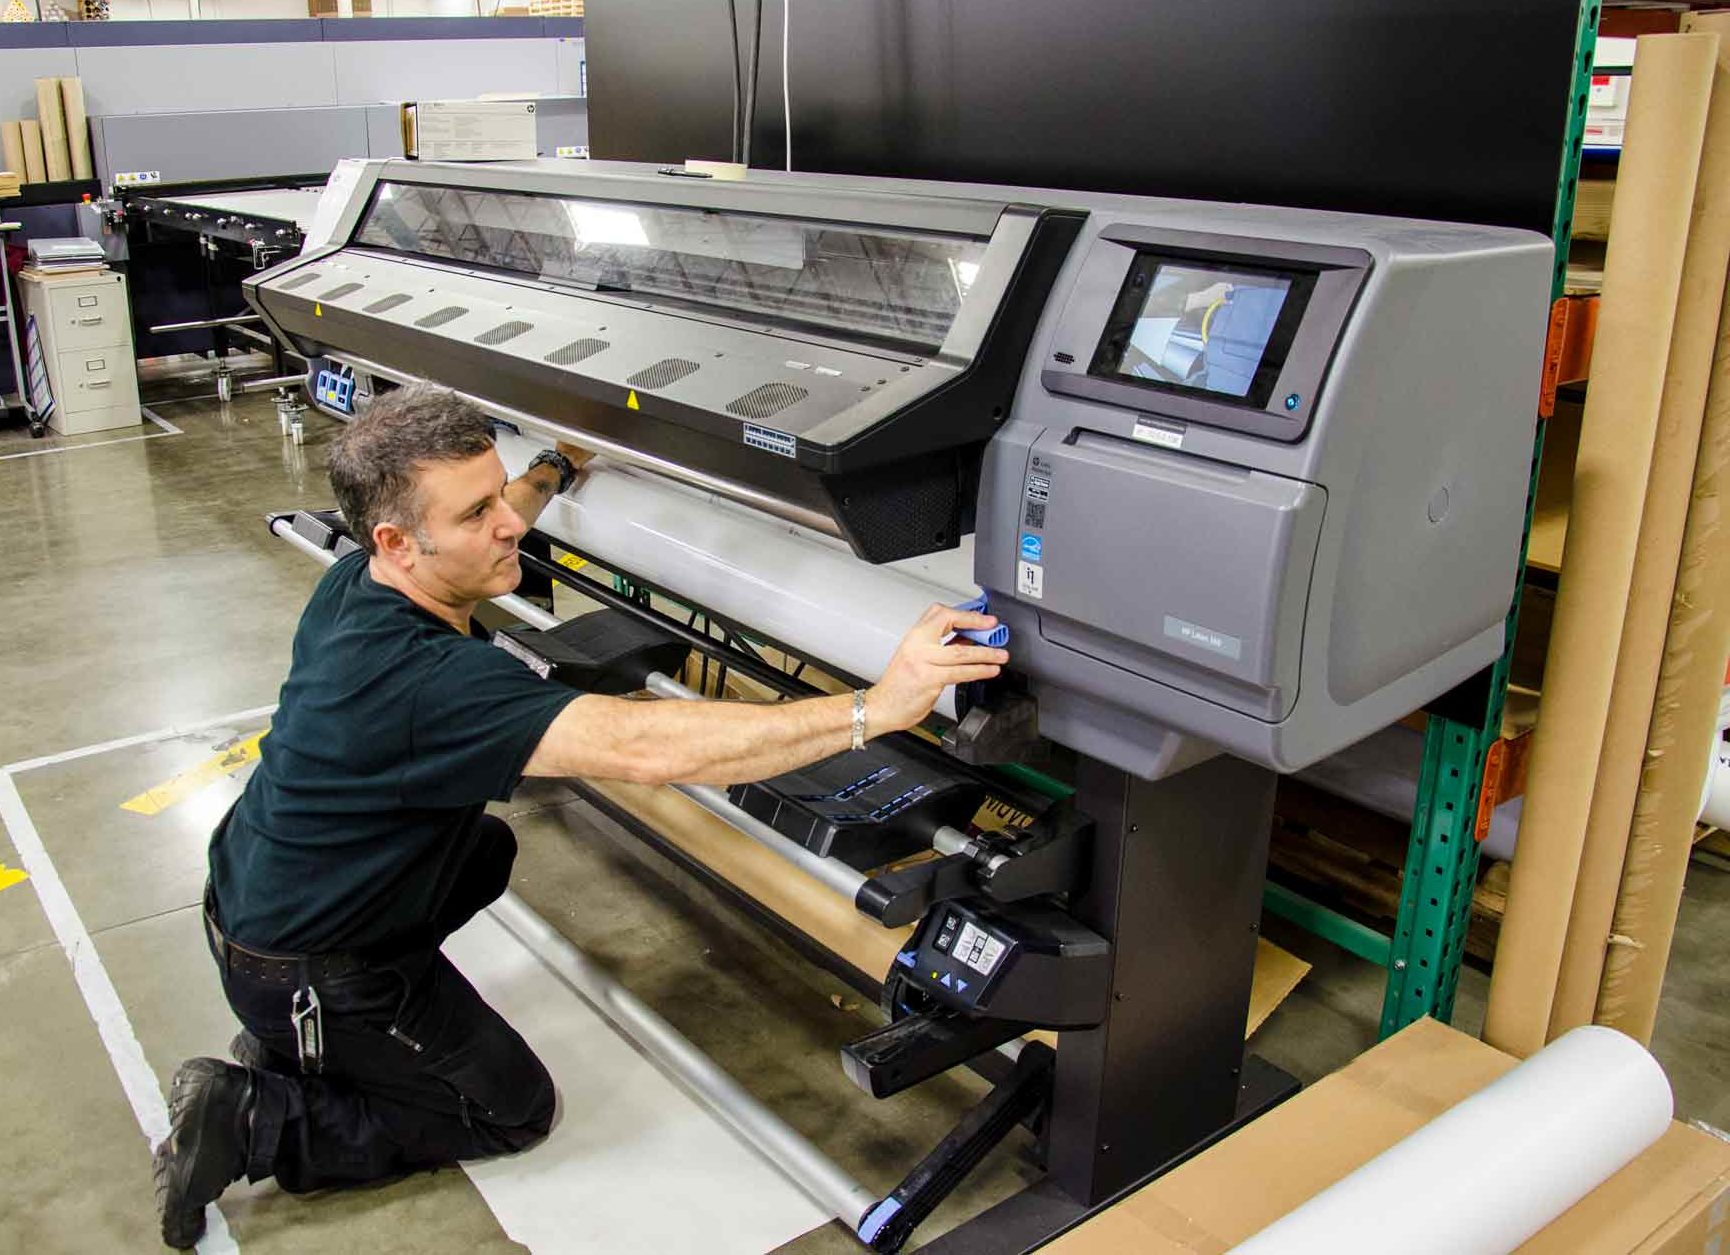 Large format printing capabilities